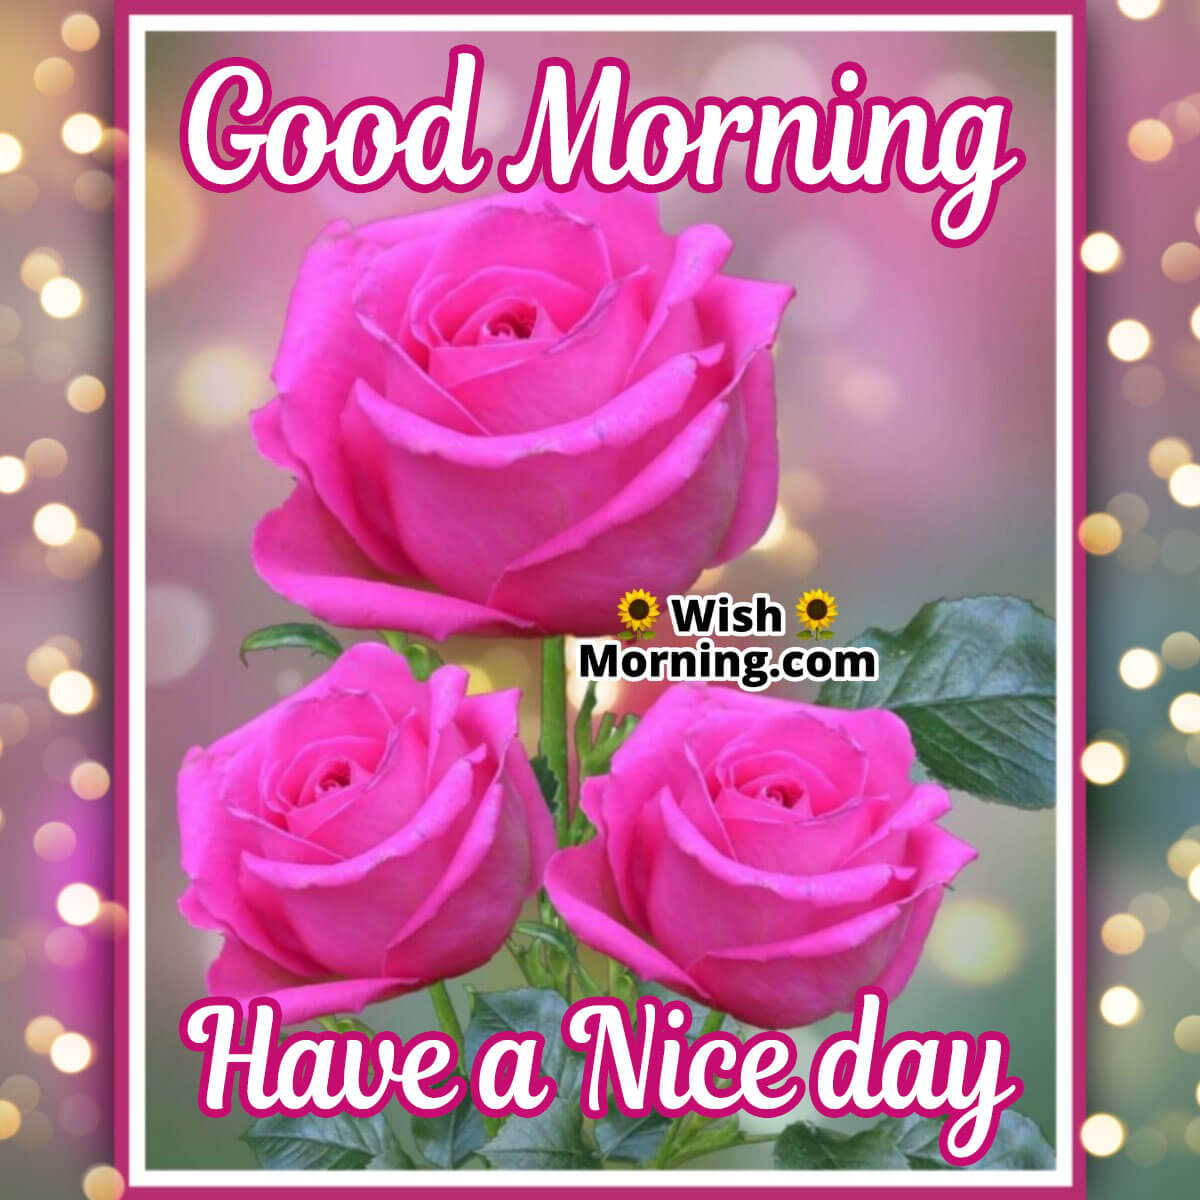 Good Morning Rose Flowers Image